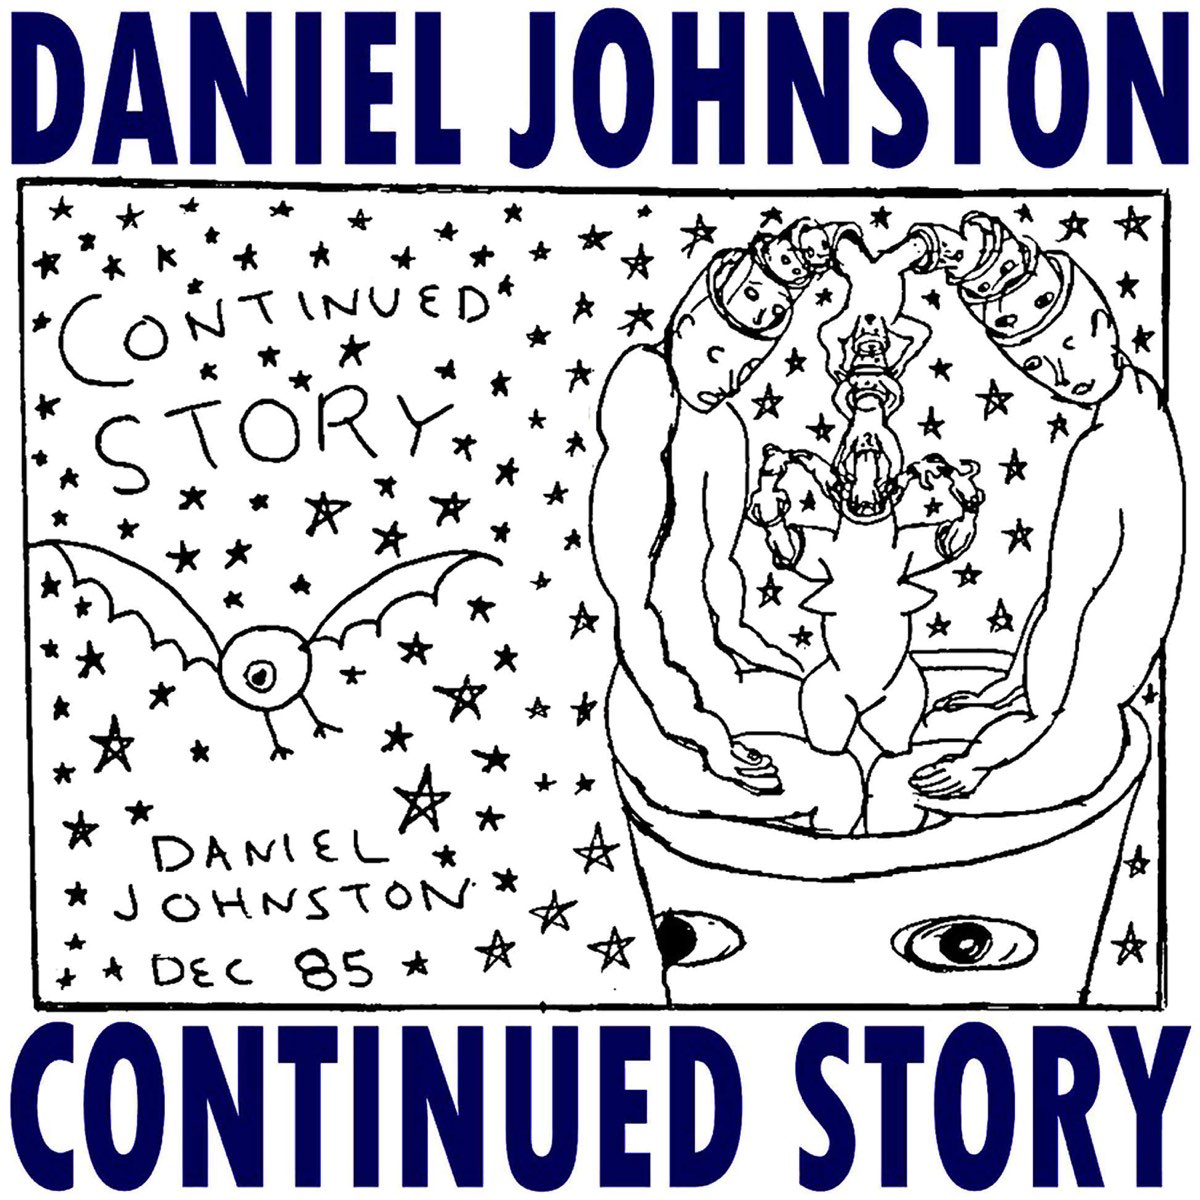 Continued story. Daniel Johnston картины. Vans Daniel Johnston. Дэниел Джонстон рисунки. Daniel Johnston Songs of Pain.